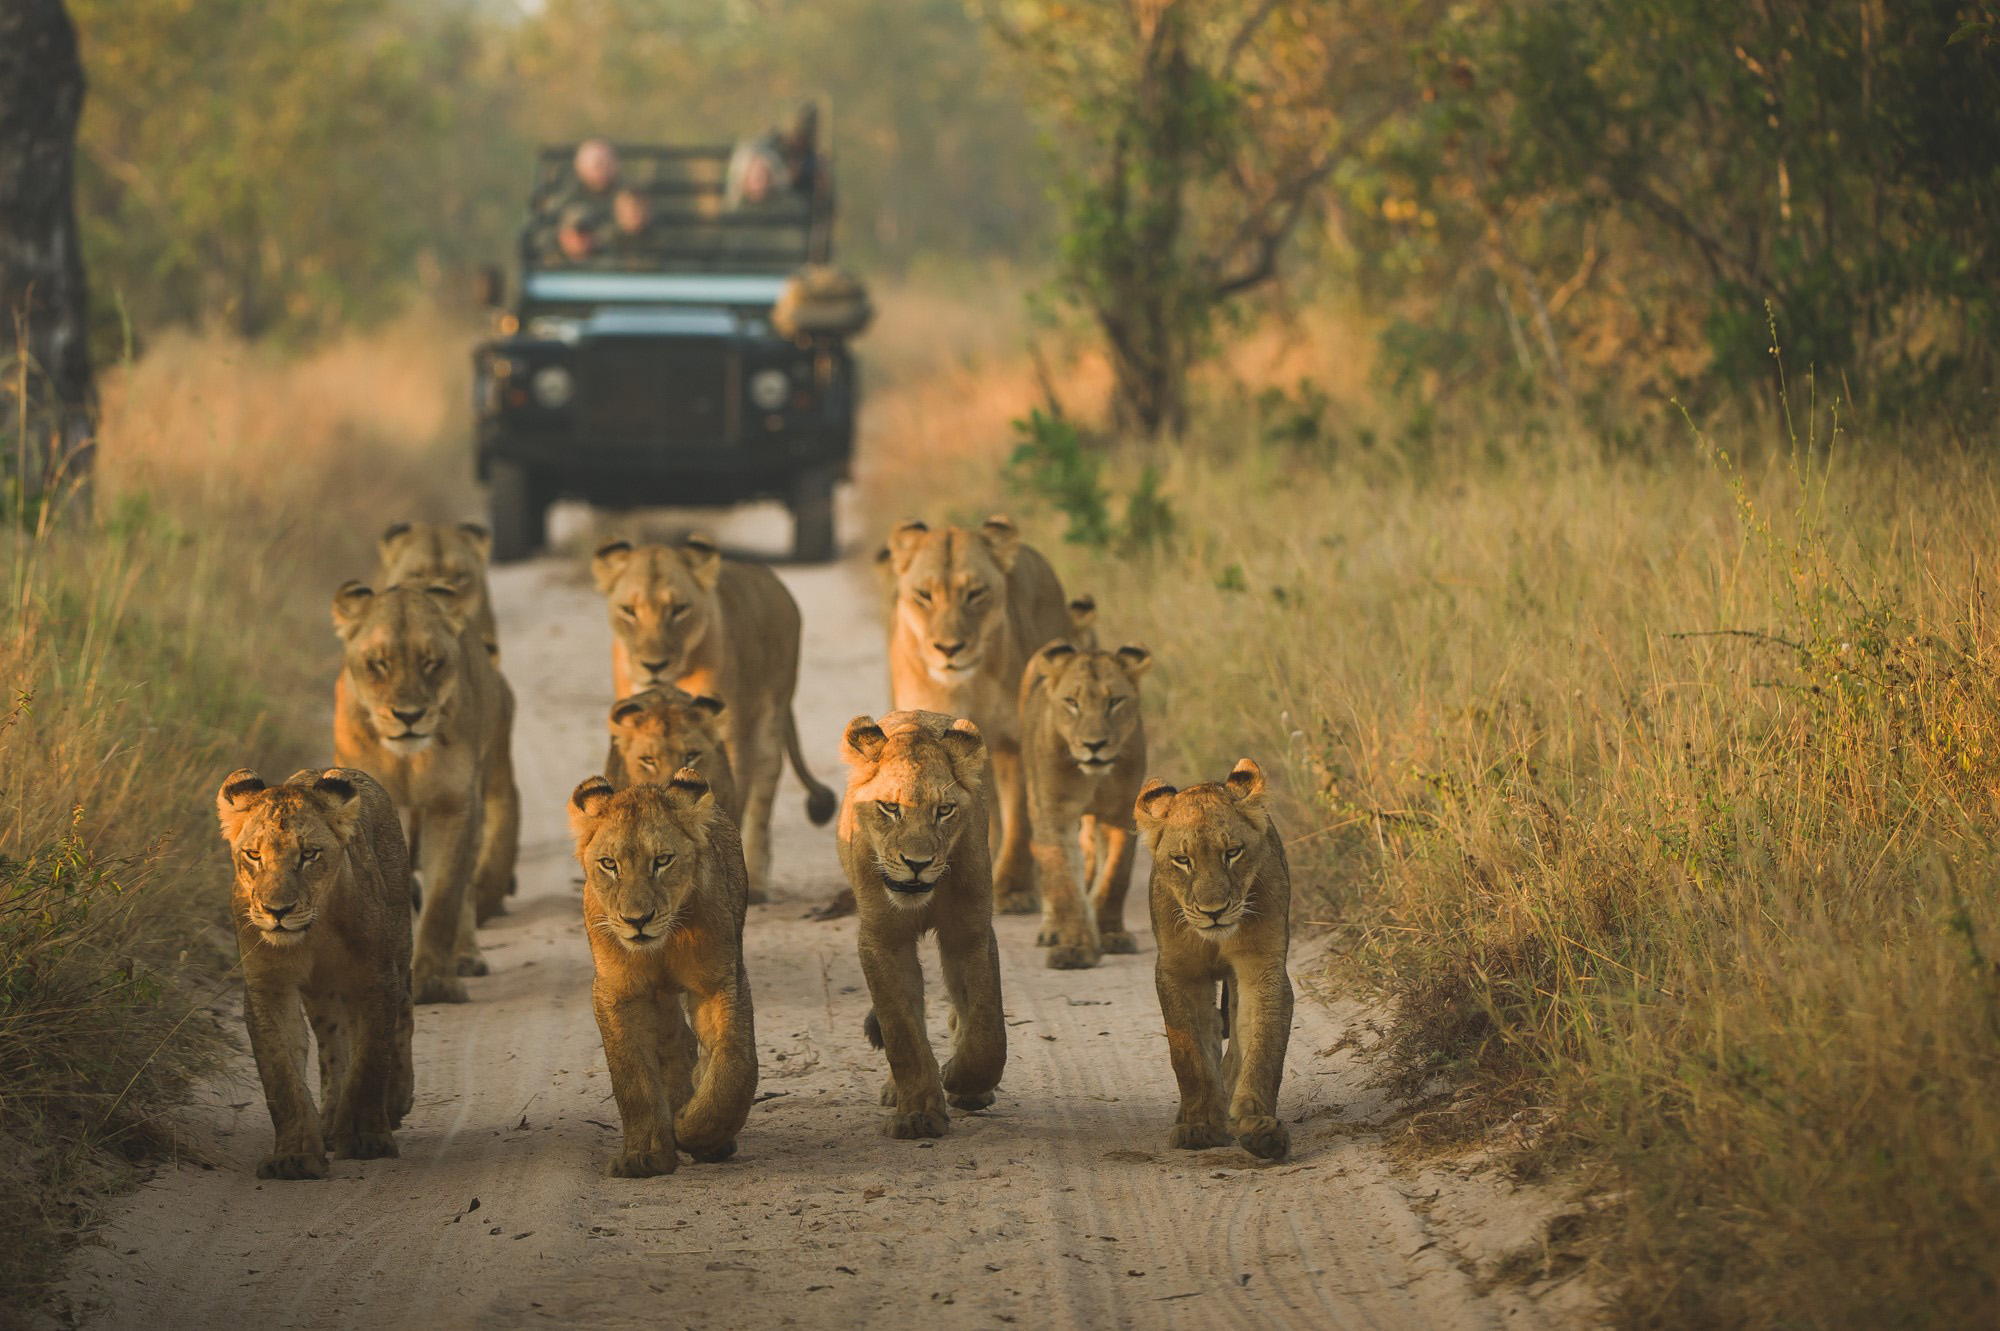 Adventurous travelers share their life-changing safari memories